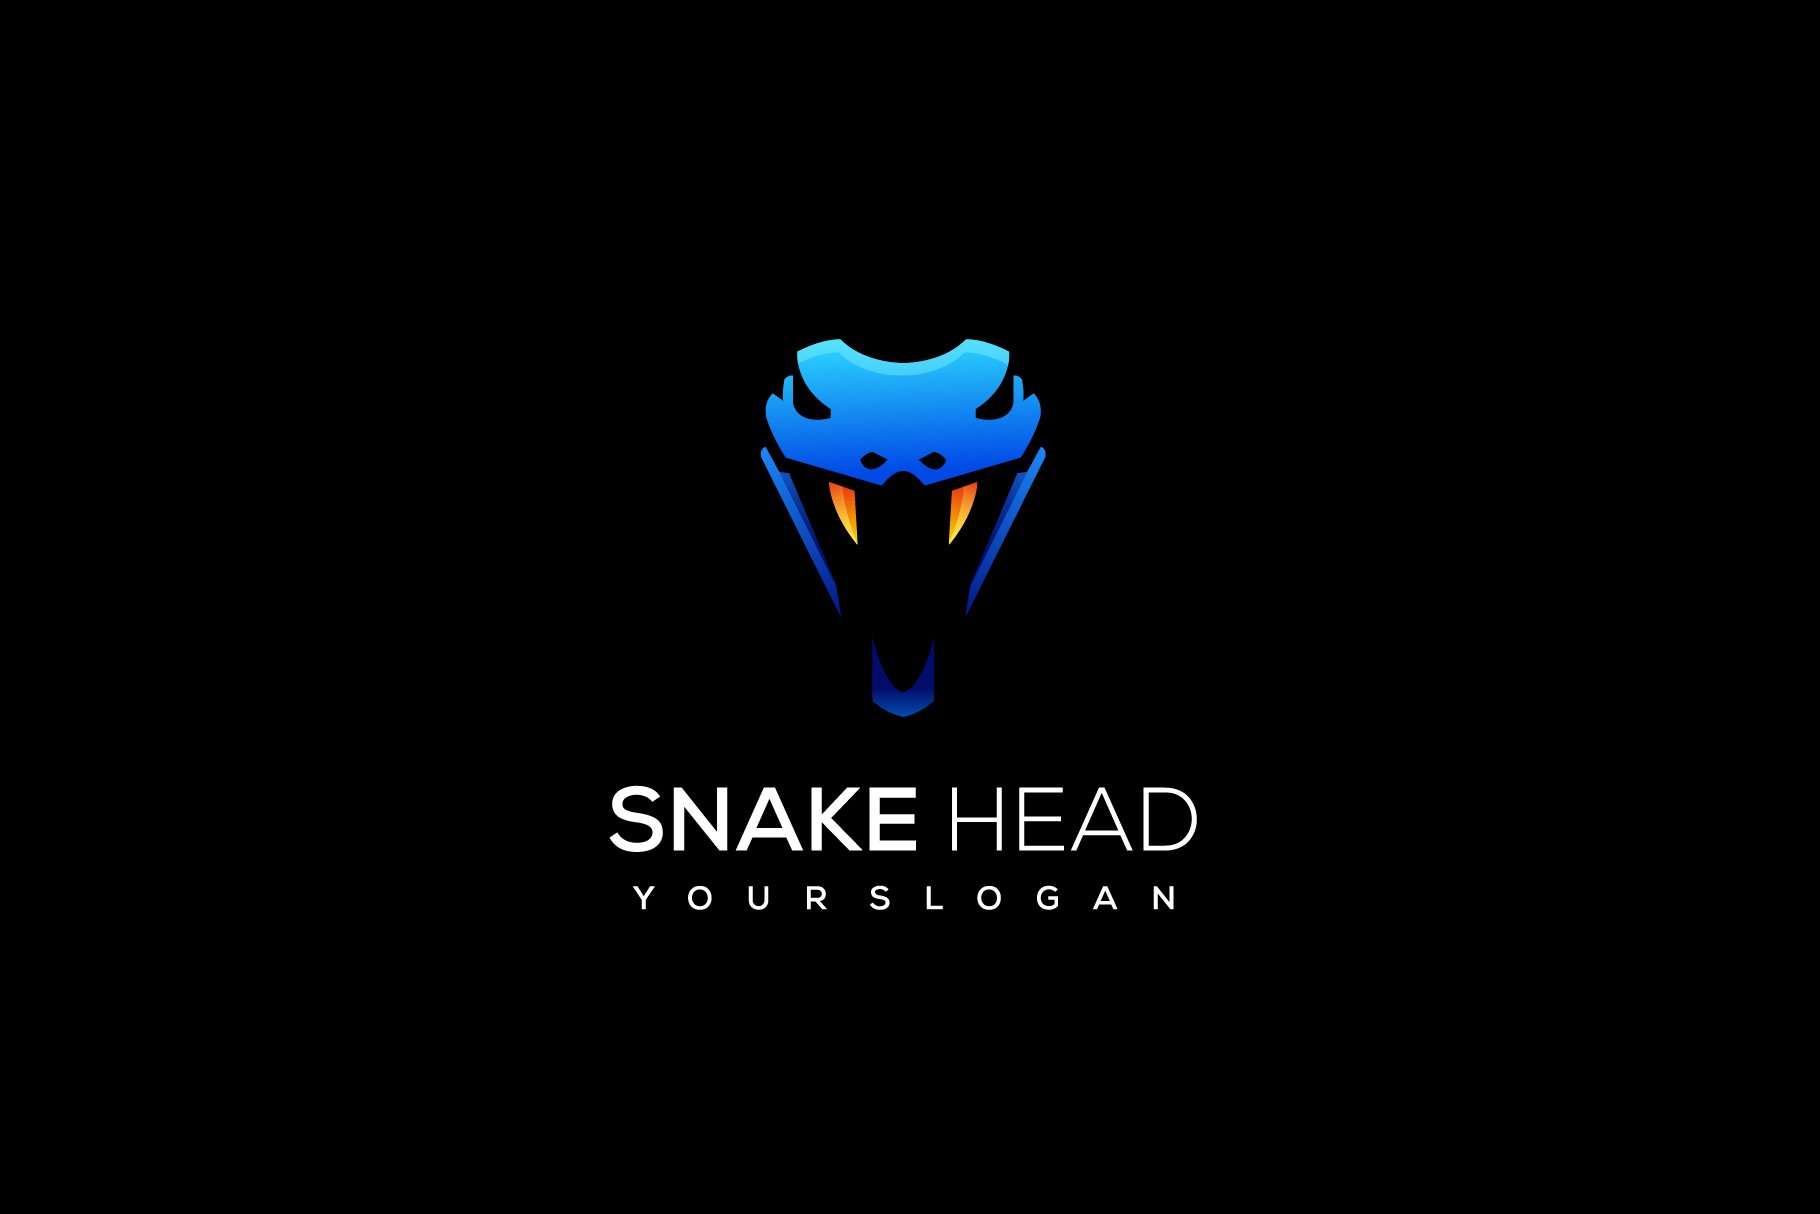 snake head logo design gradient cover image.